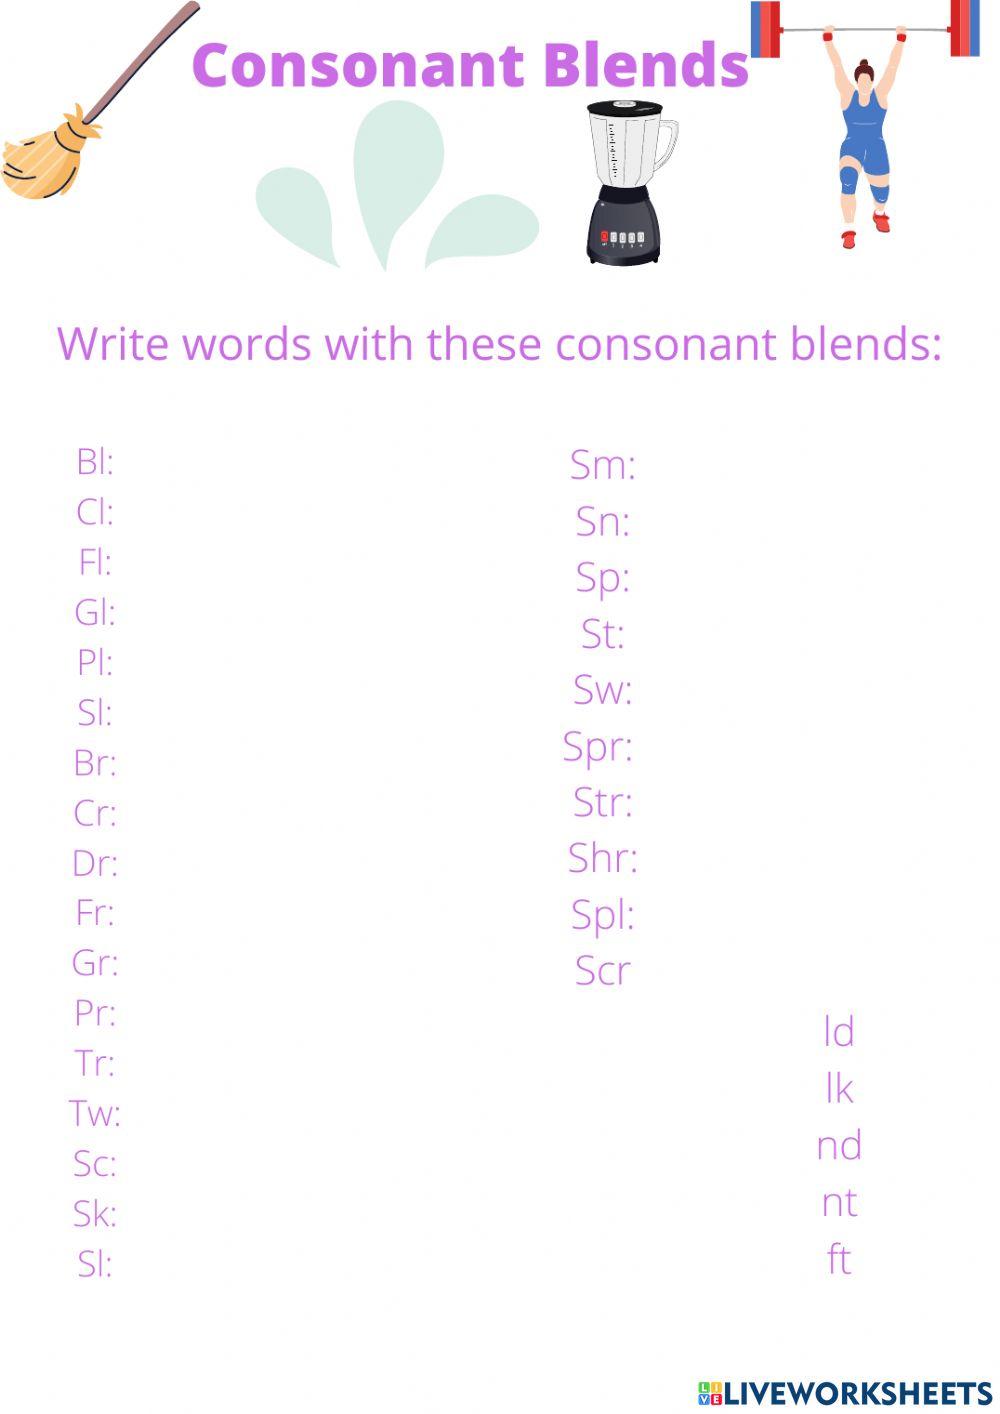 Consonant blends